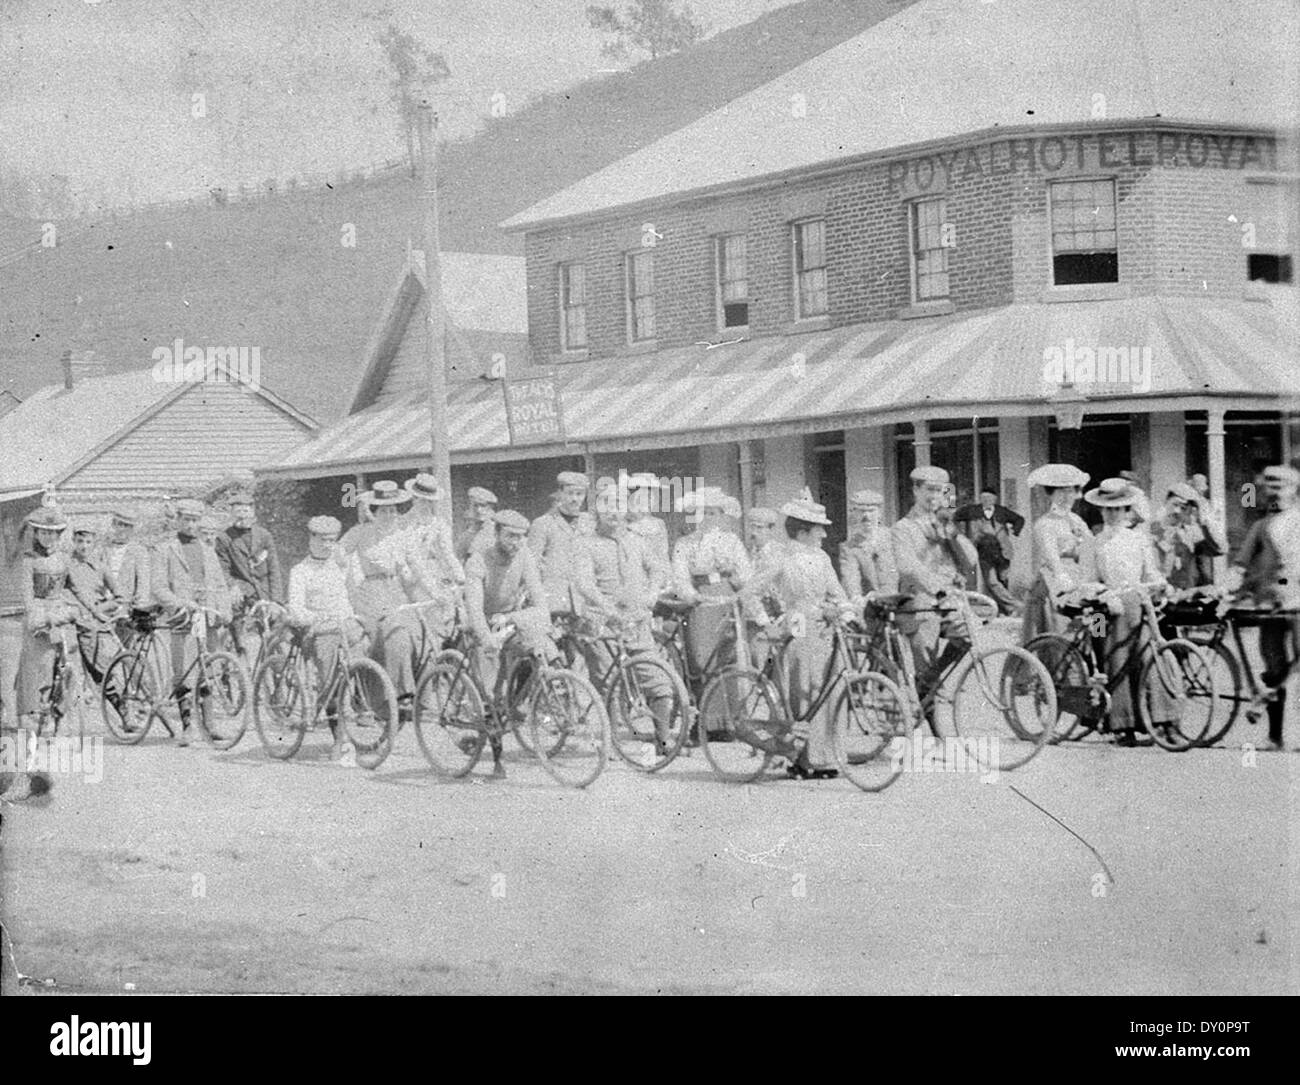 Waratah Rovers Bicycle Club (WRBC) in tour. Sydney - Campbelltown - Appin - Bulli - Costa Sud. Foto scattata a Picton fuori dal Royal Hotel - Picton, NSW, Ottobre 1900 Foto Stock